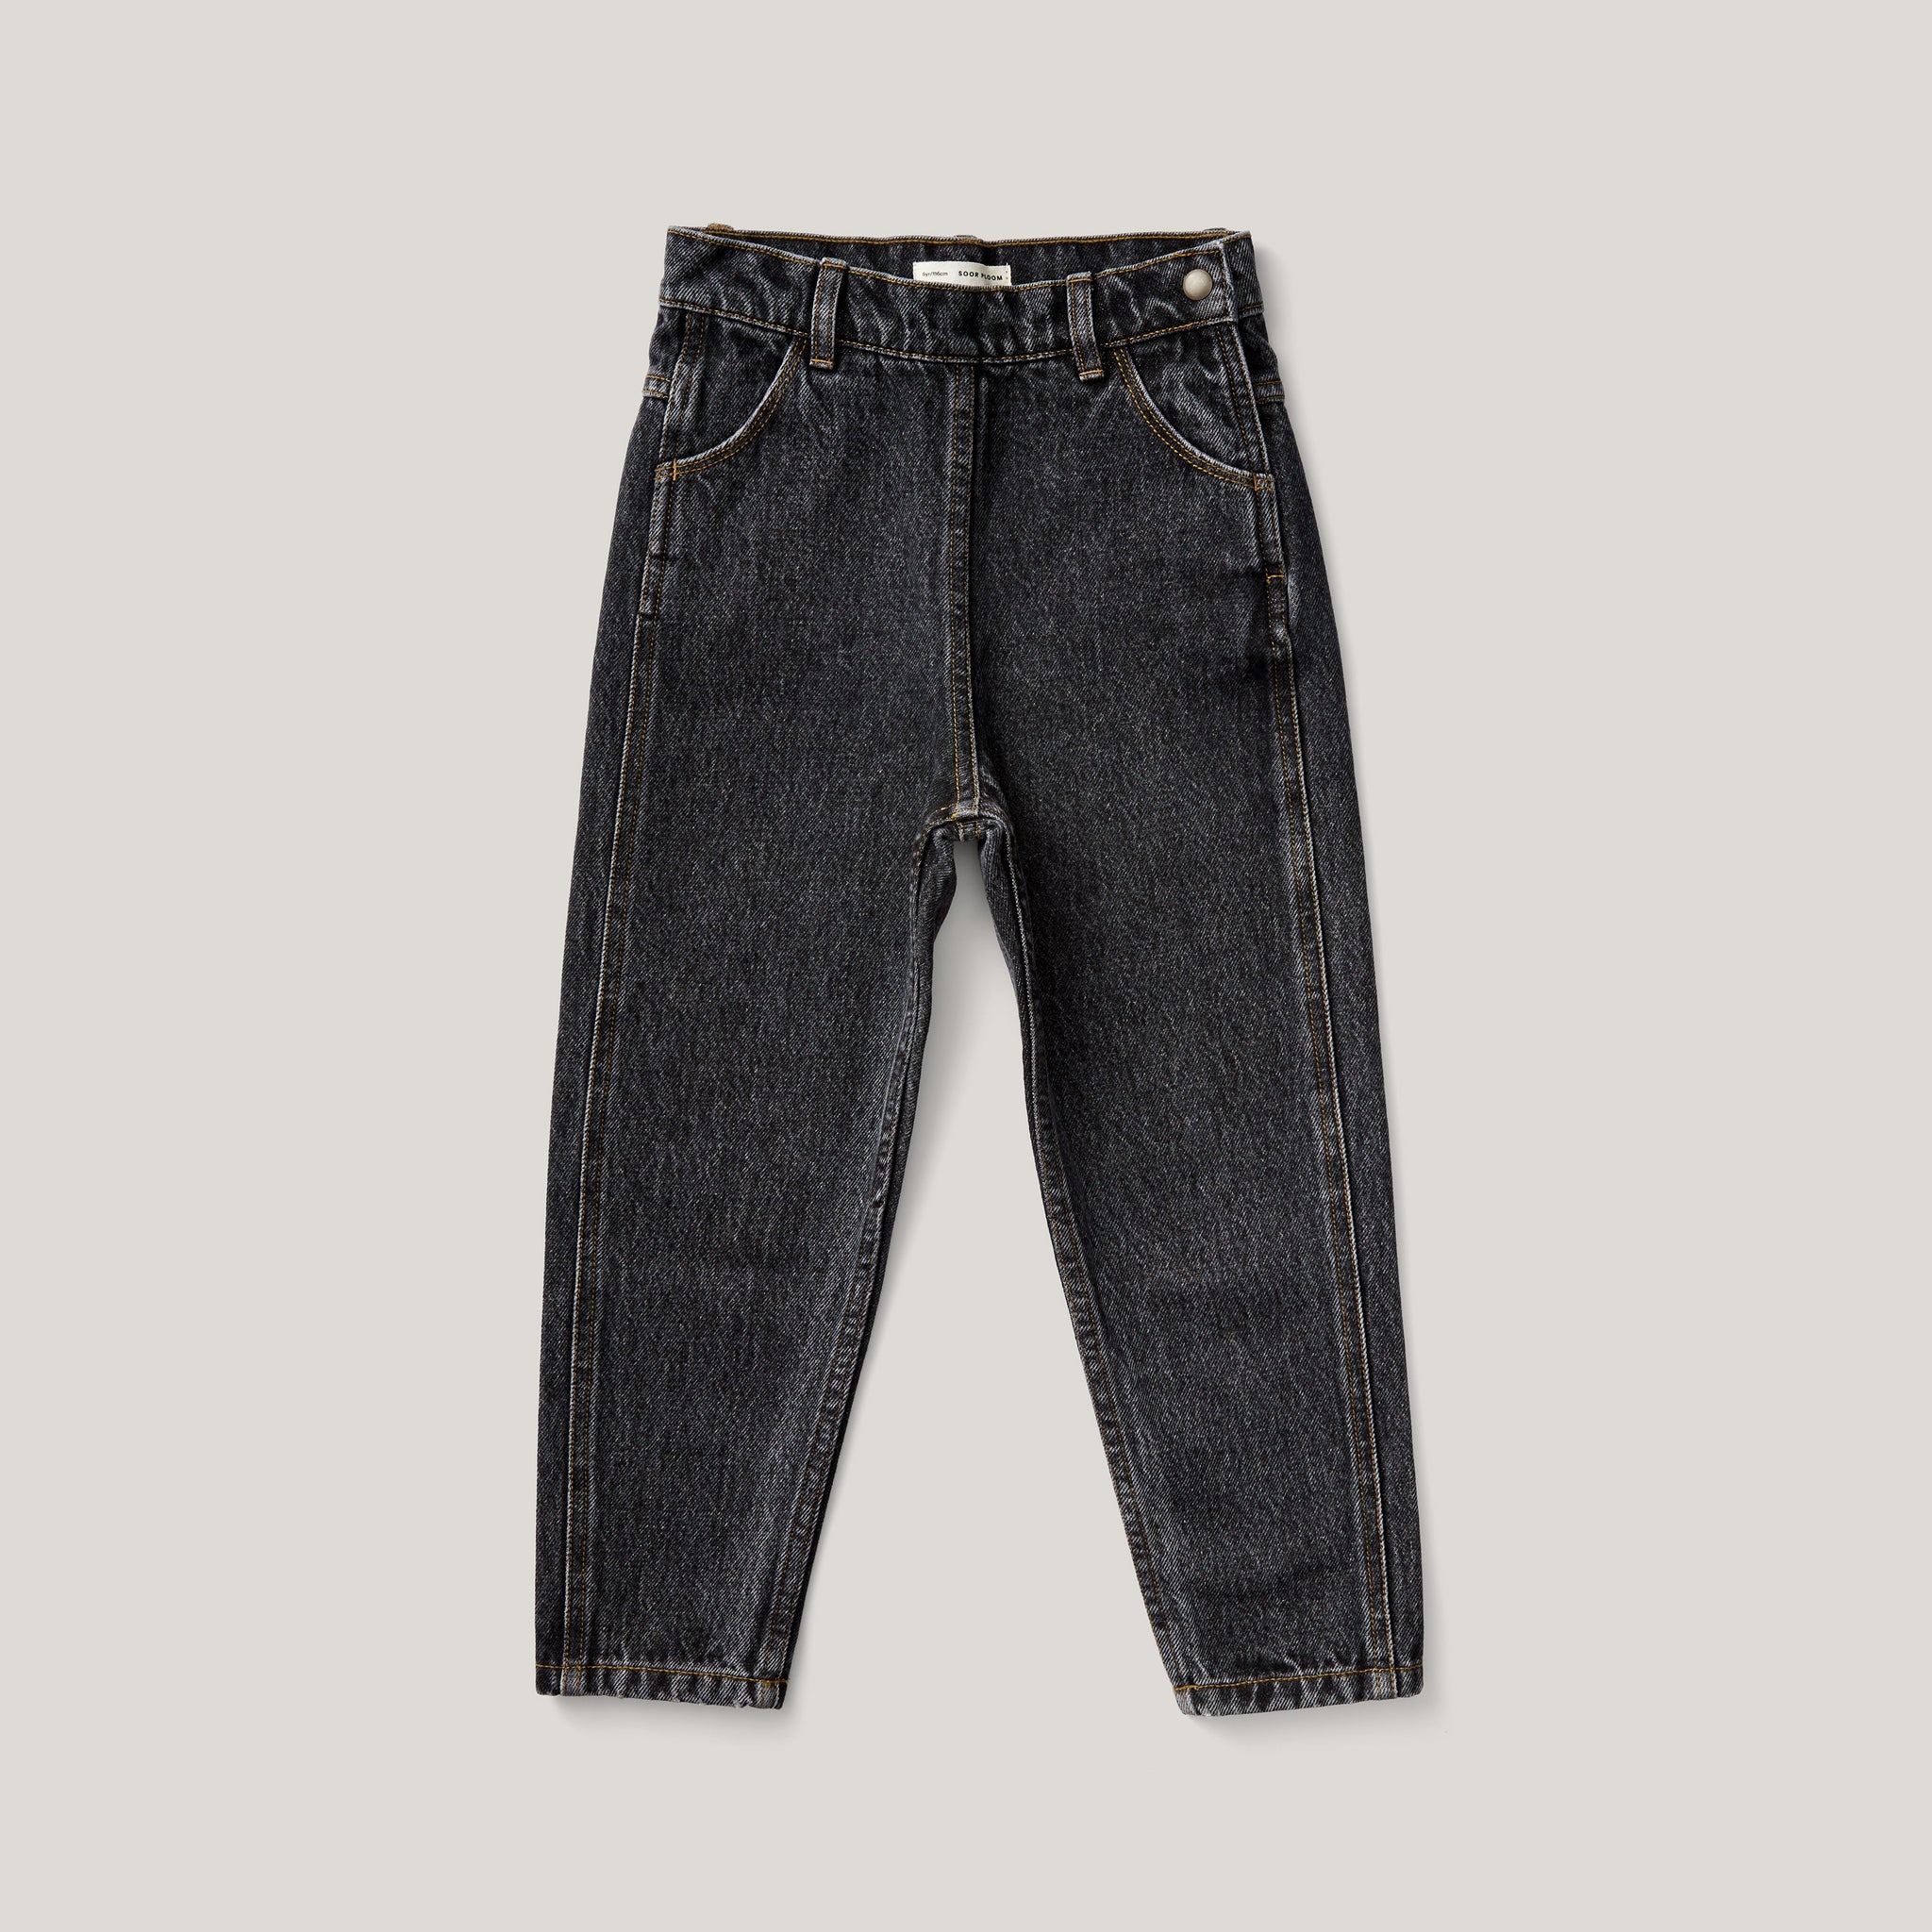 Vintage Jean, Black Denim